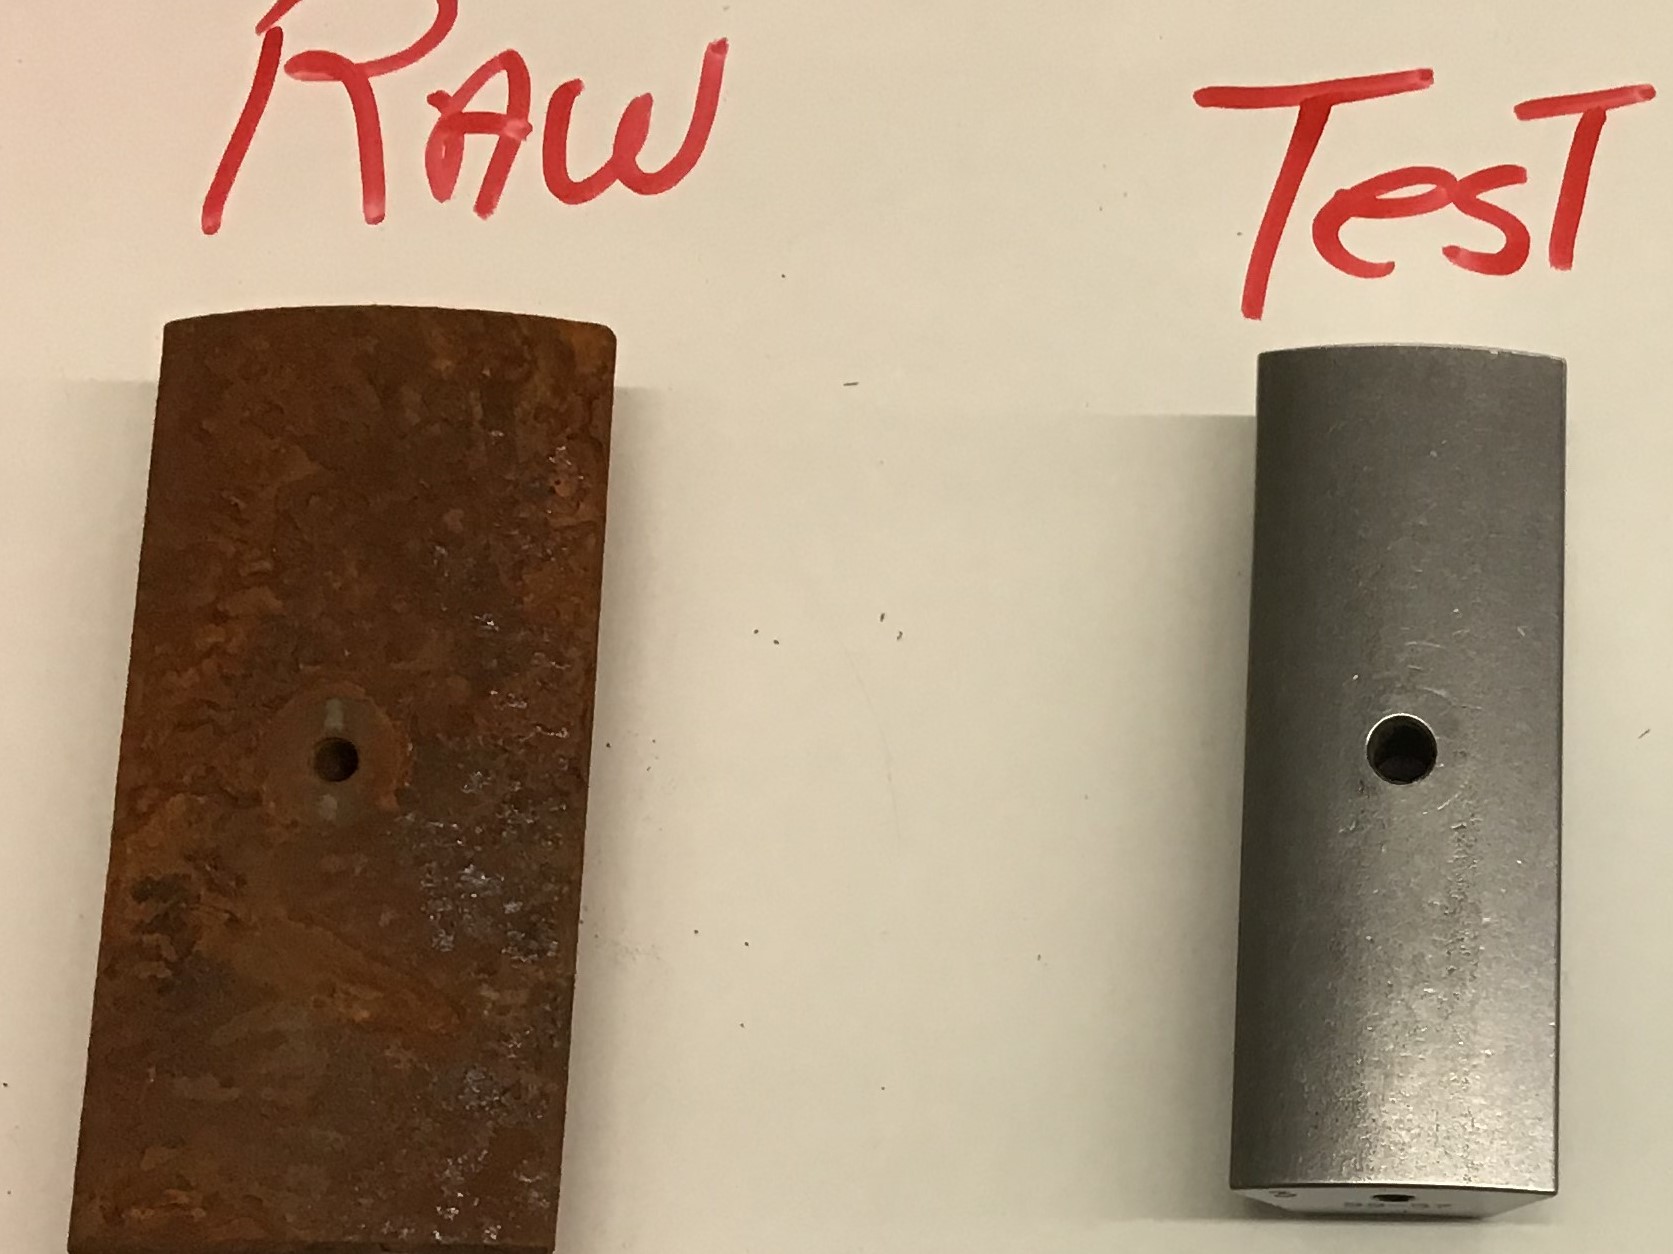 Rust Removal using Tumbling